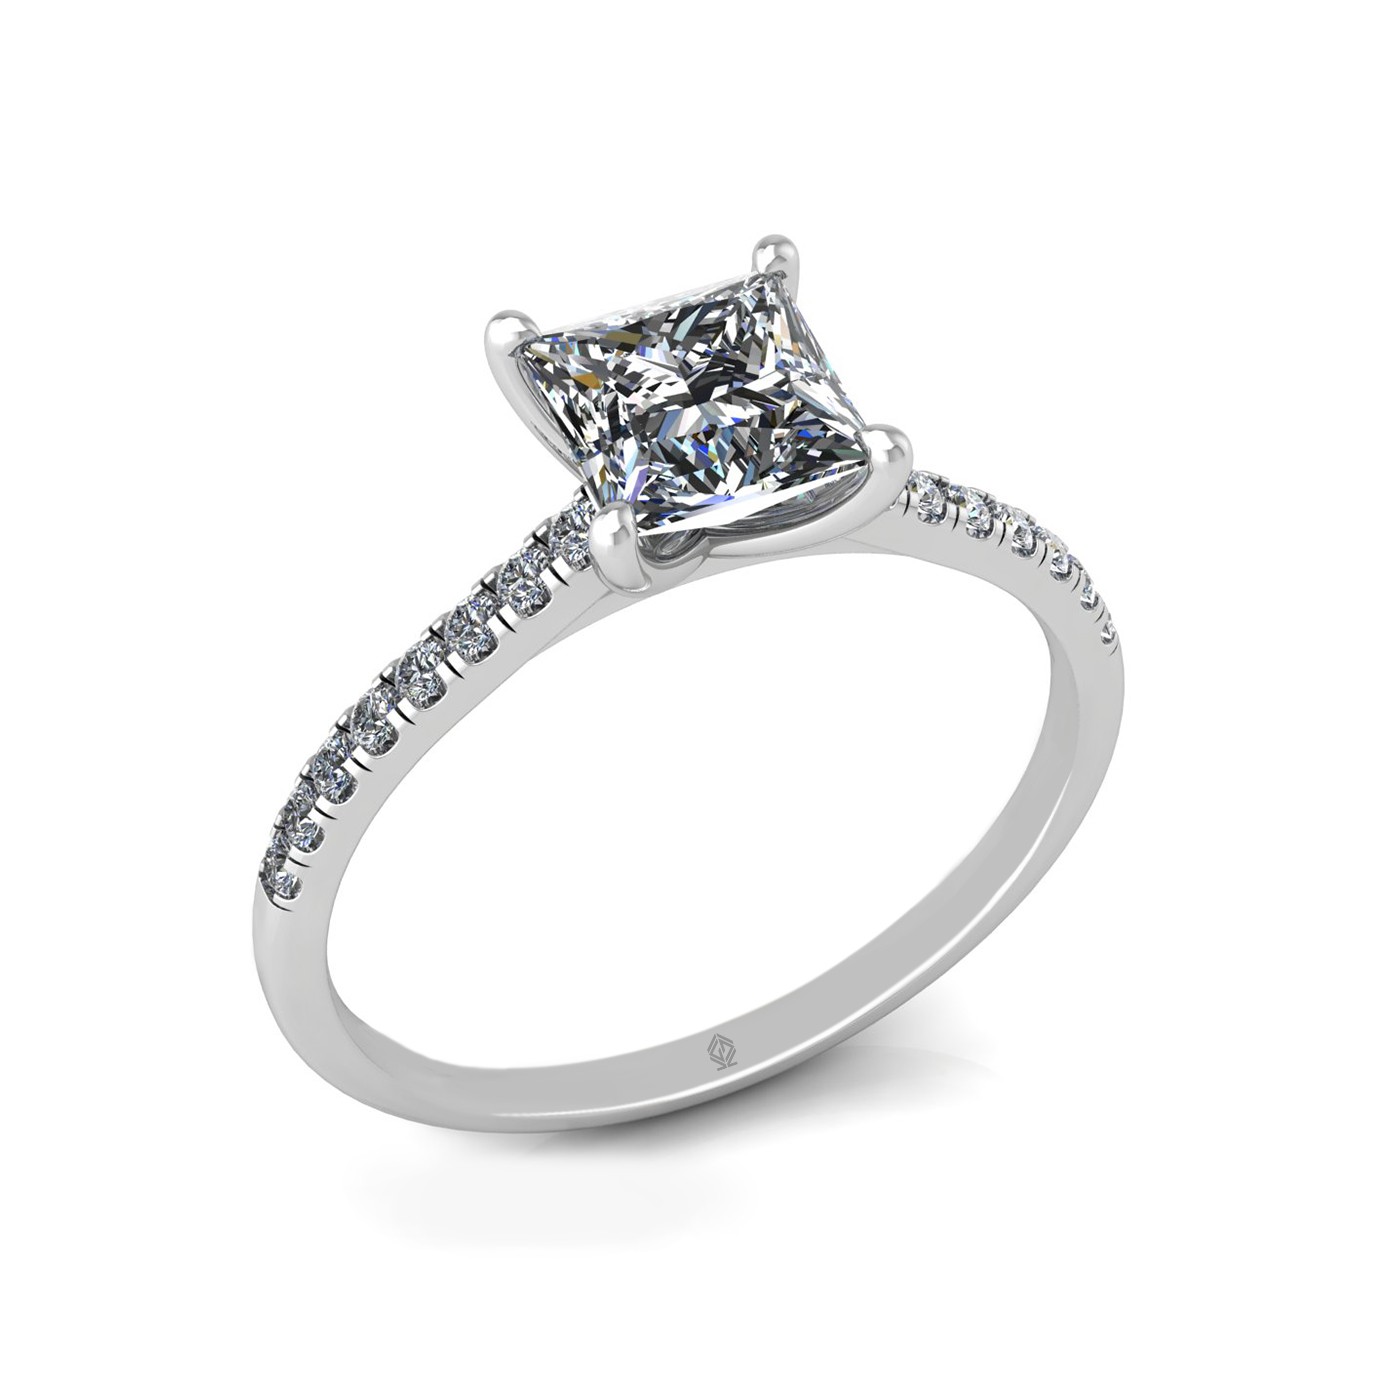 18k white gold 1,00 ct 4 prongs princess cut diamond engagement ring with whisper thin pavÉ set band